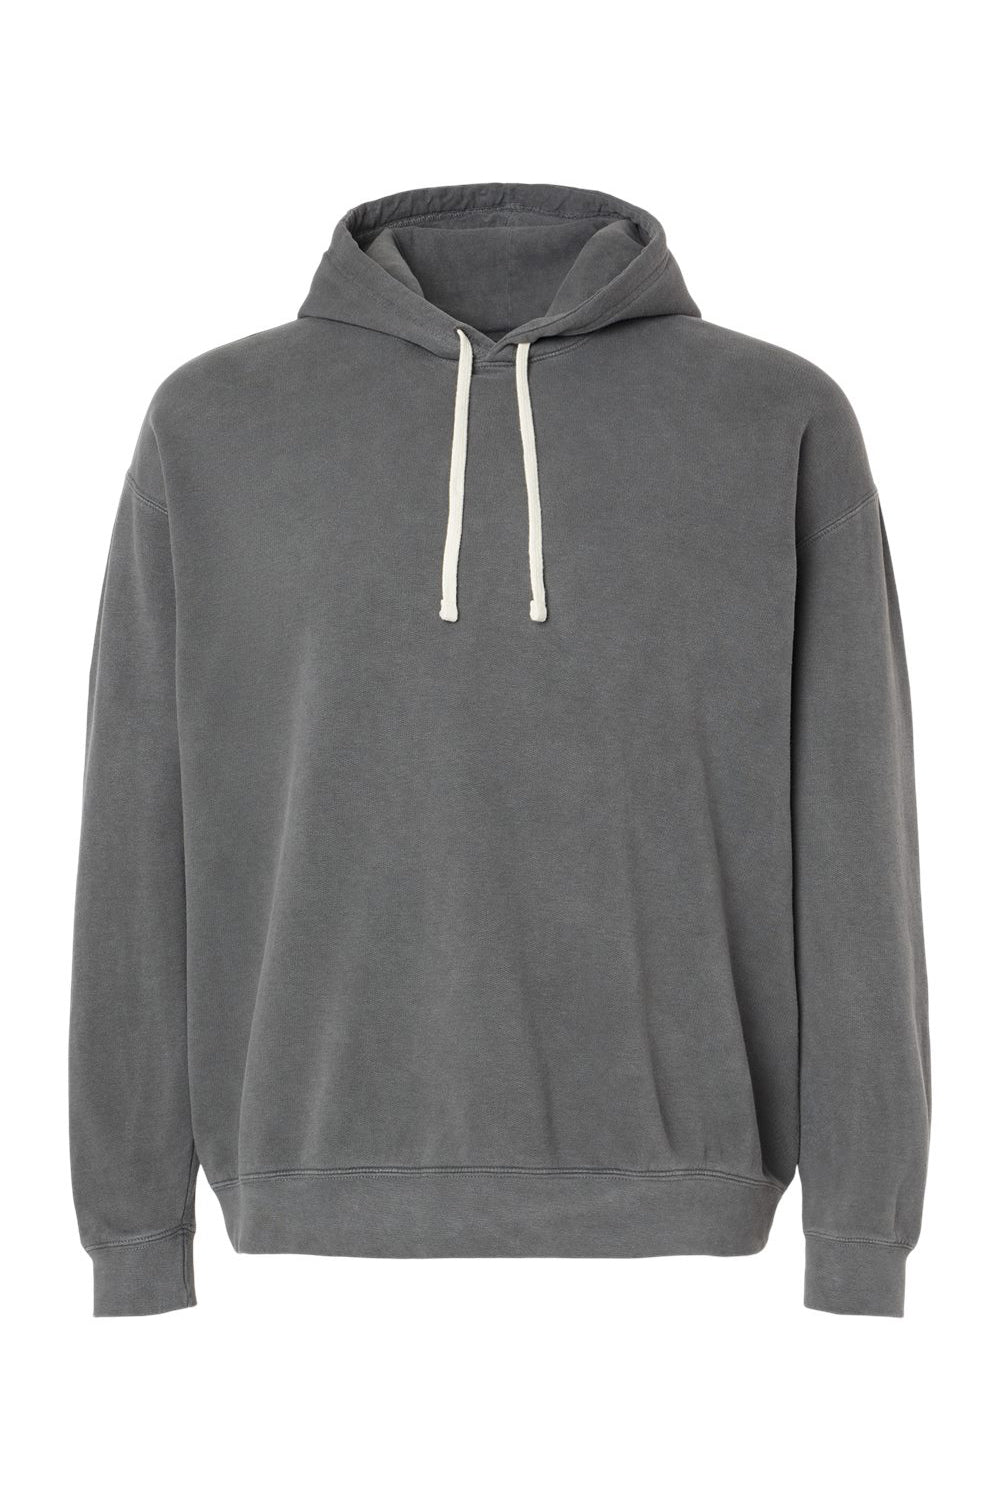 Comfort Colors 1467 Mens Garment Dyed Fleece Hooded Sweatshirt Hoodie Pepper Grey Flat Front